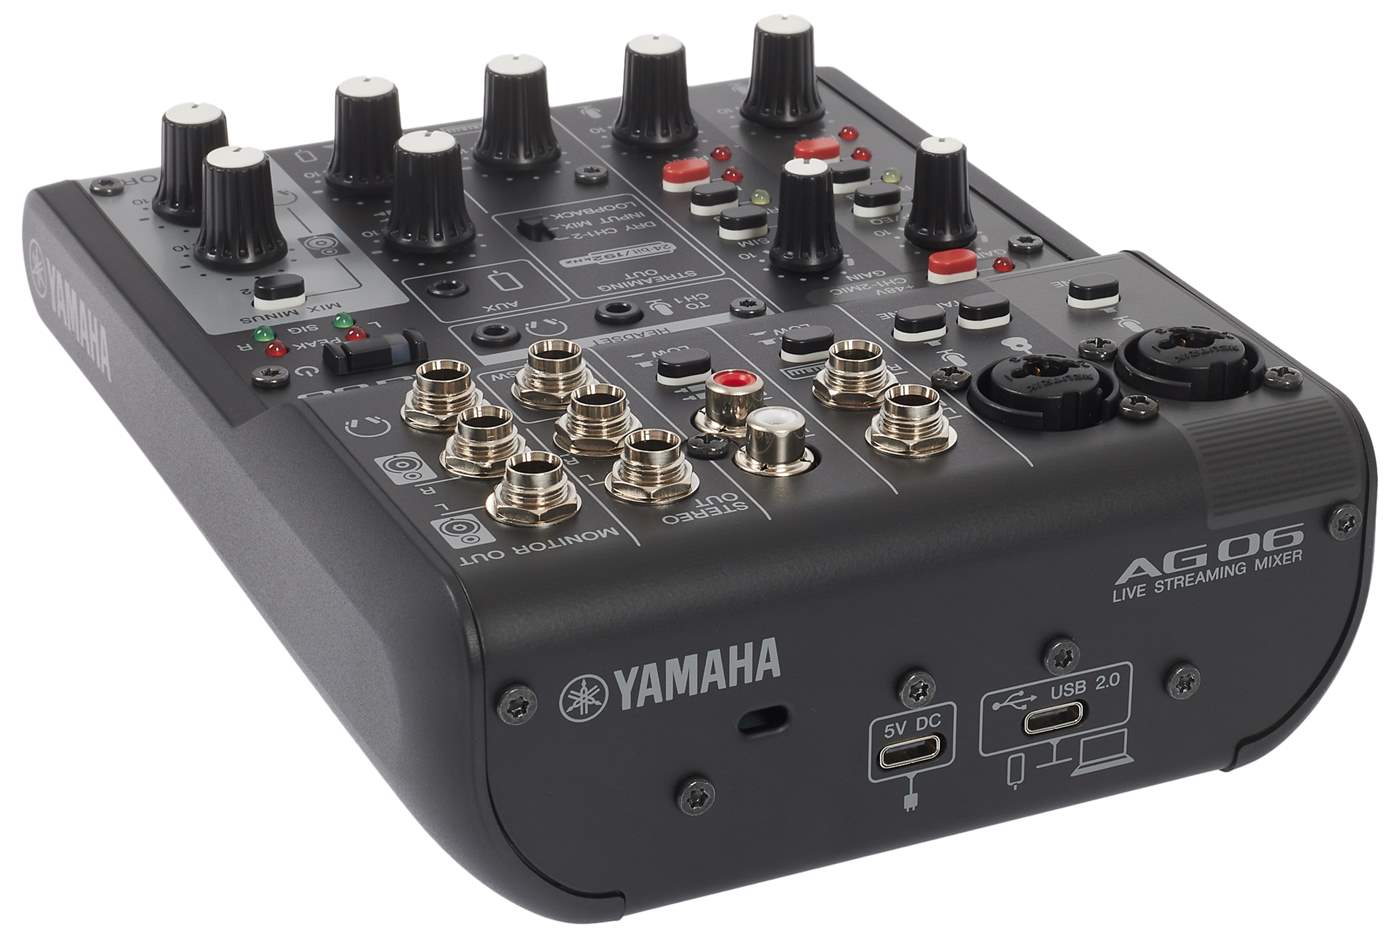 YAMAHA AG06 MK2 Analogue Mixer | Kytary.ie